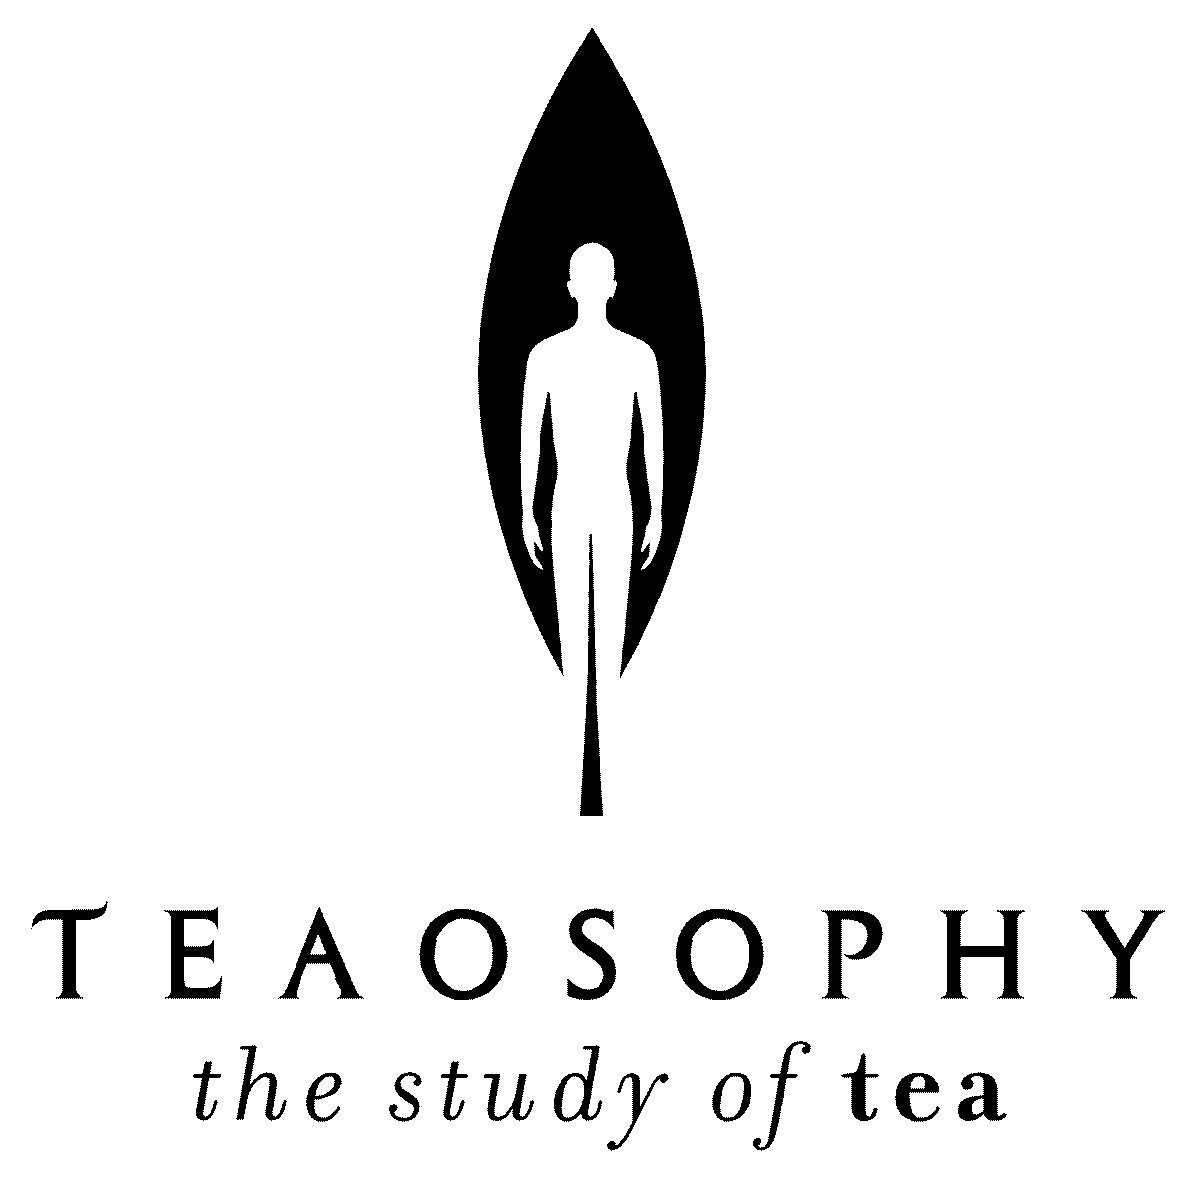  TEAOSOPHY THE STUDY OF TEA